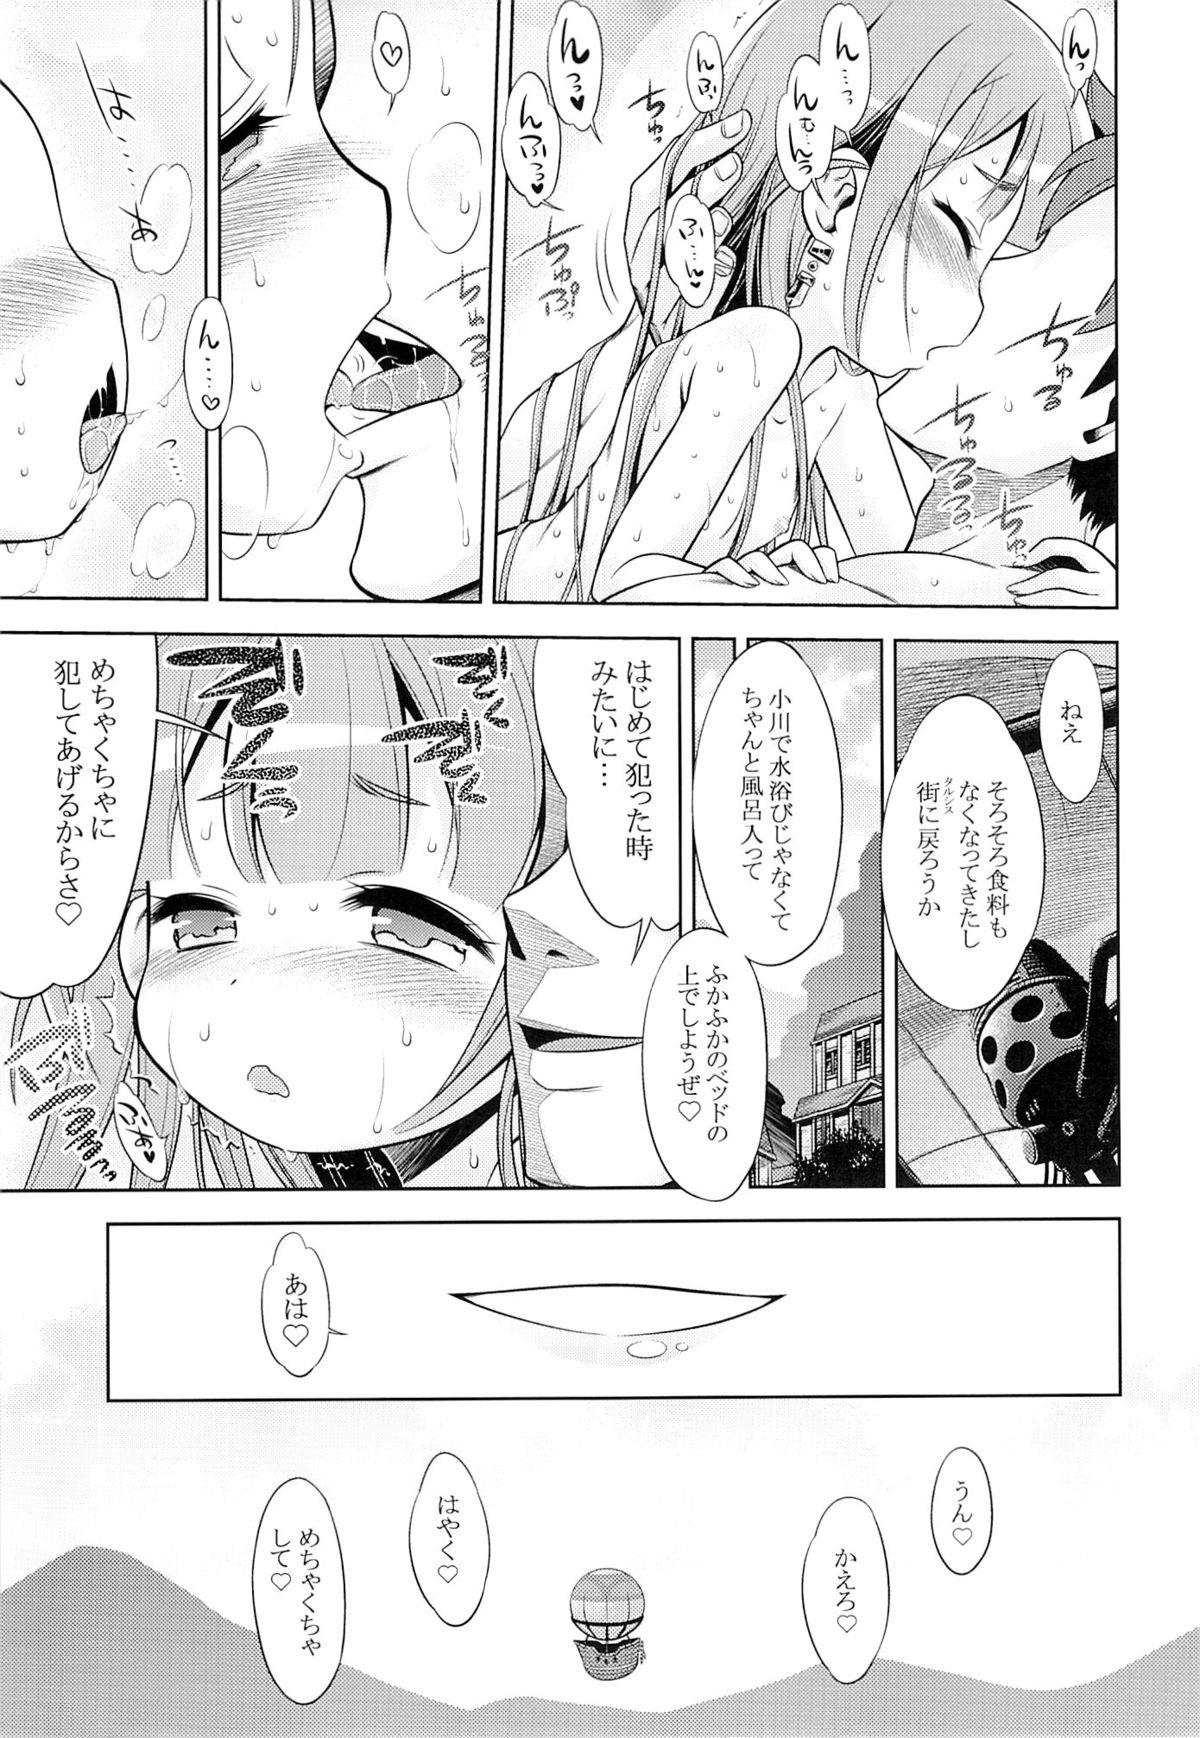 Teenfuns Sekaiju no Anone 24 - Etrian odyssey Babysitter - Page 32